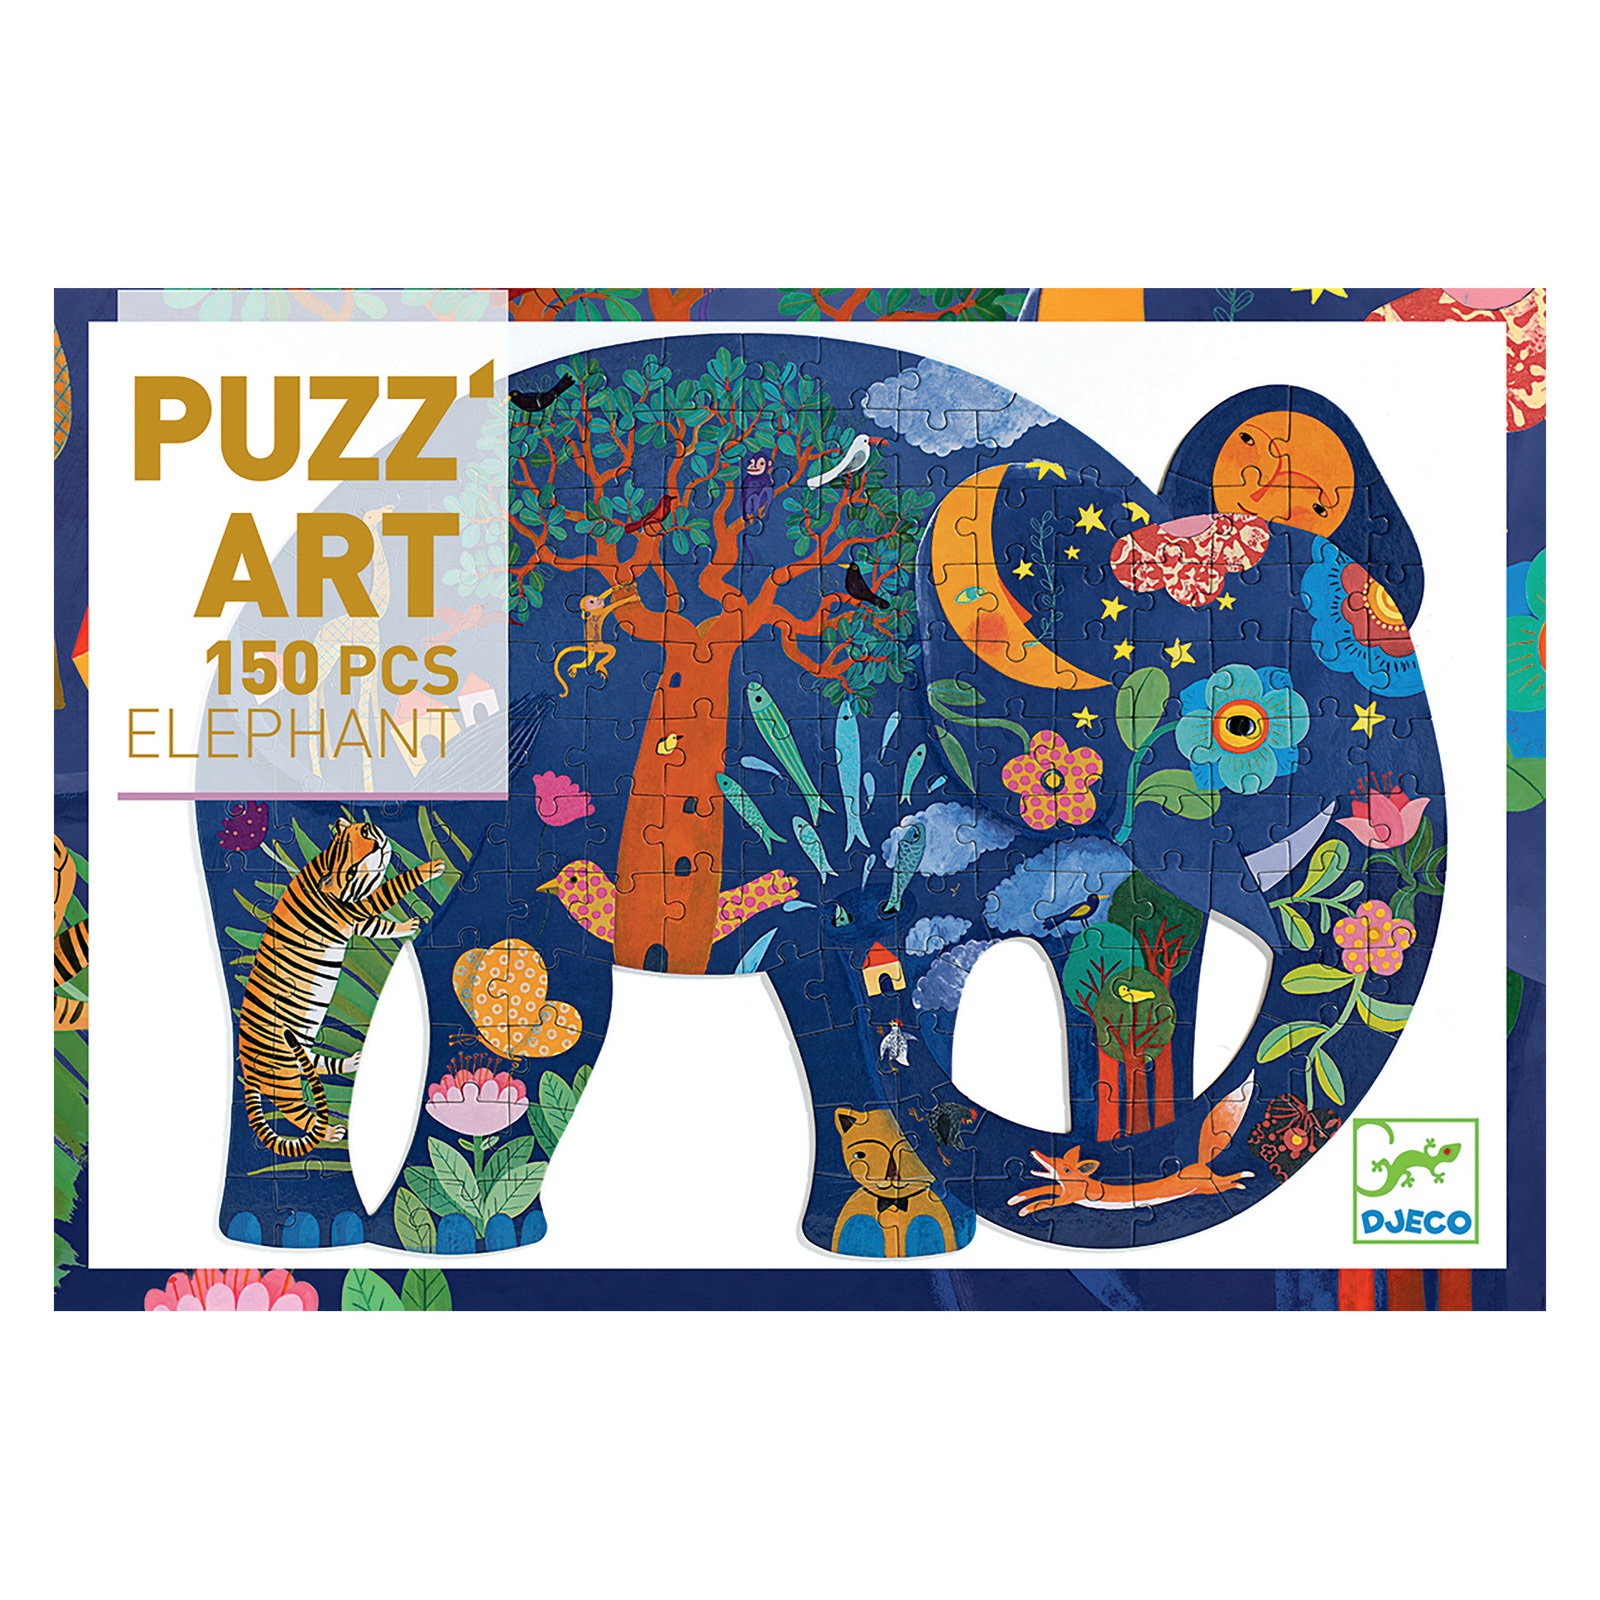 DJECO Puzz' Art Puzzles, Elephant 150 Piece Puzzle